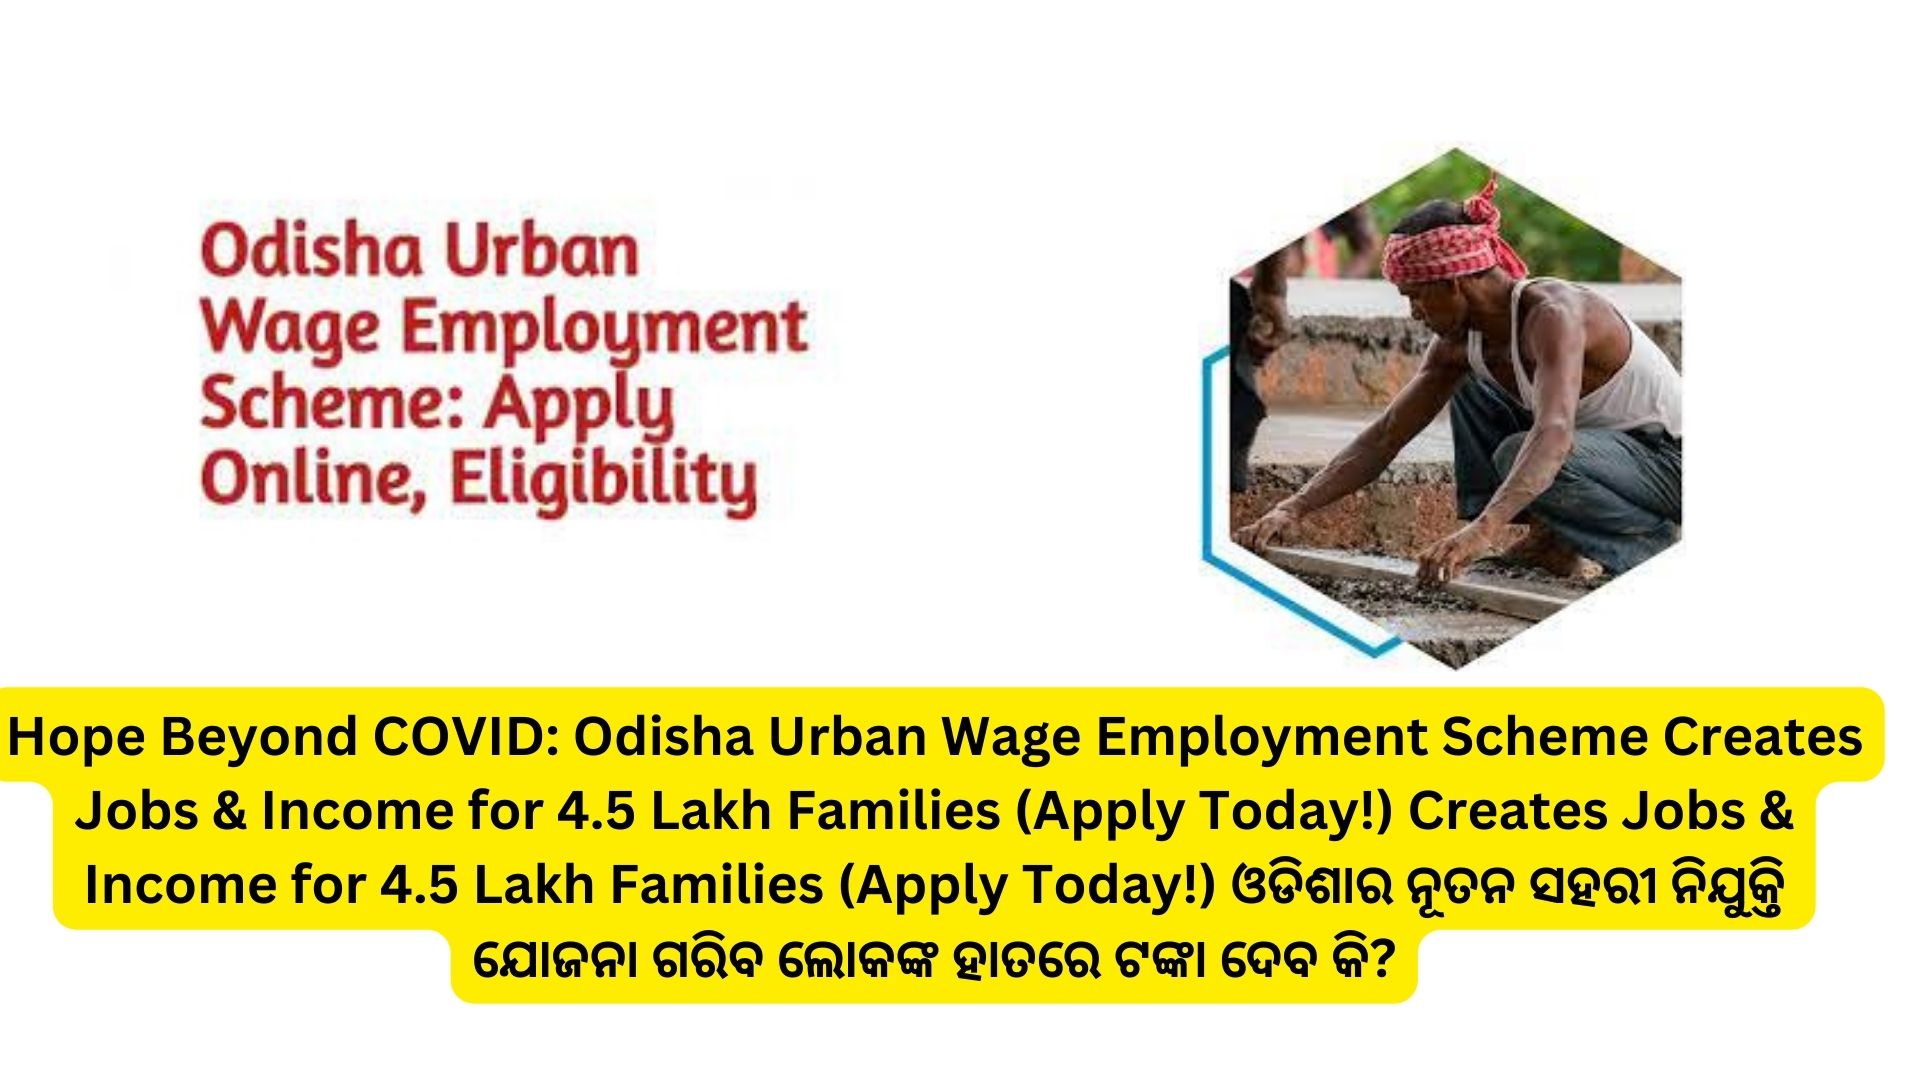 Hope Beyond COVID: Odisha Urban Wage Employment Scheme Creates Jobs & Income for 4.5 Lakh Families (Apply Today!) Creates Jobs & Income for 4.5 Lakh Families (Apply Today!) ଓଡିଶାର ନୂତନ ସହରୀ ନିଯୁକ୍ତି ଯୋଜନା ଗରିବ ଲୋକଙ୍କ ହାତରେ ଟଙ୍କା ଦେବ କି?